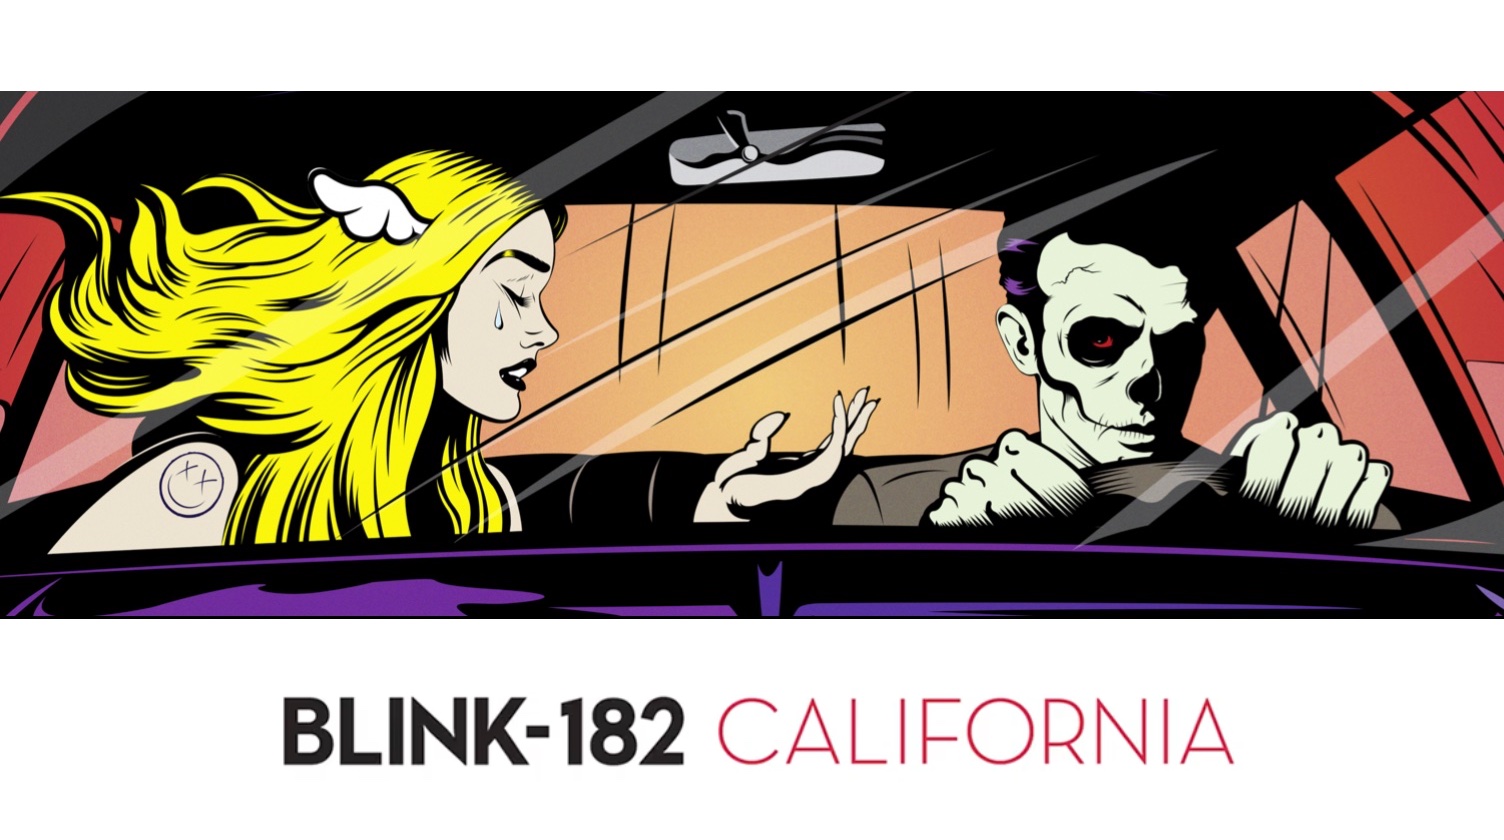 california - blink-182 - California : critique de l'album blink cali